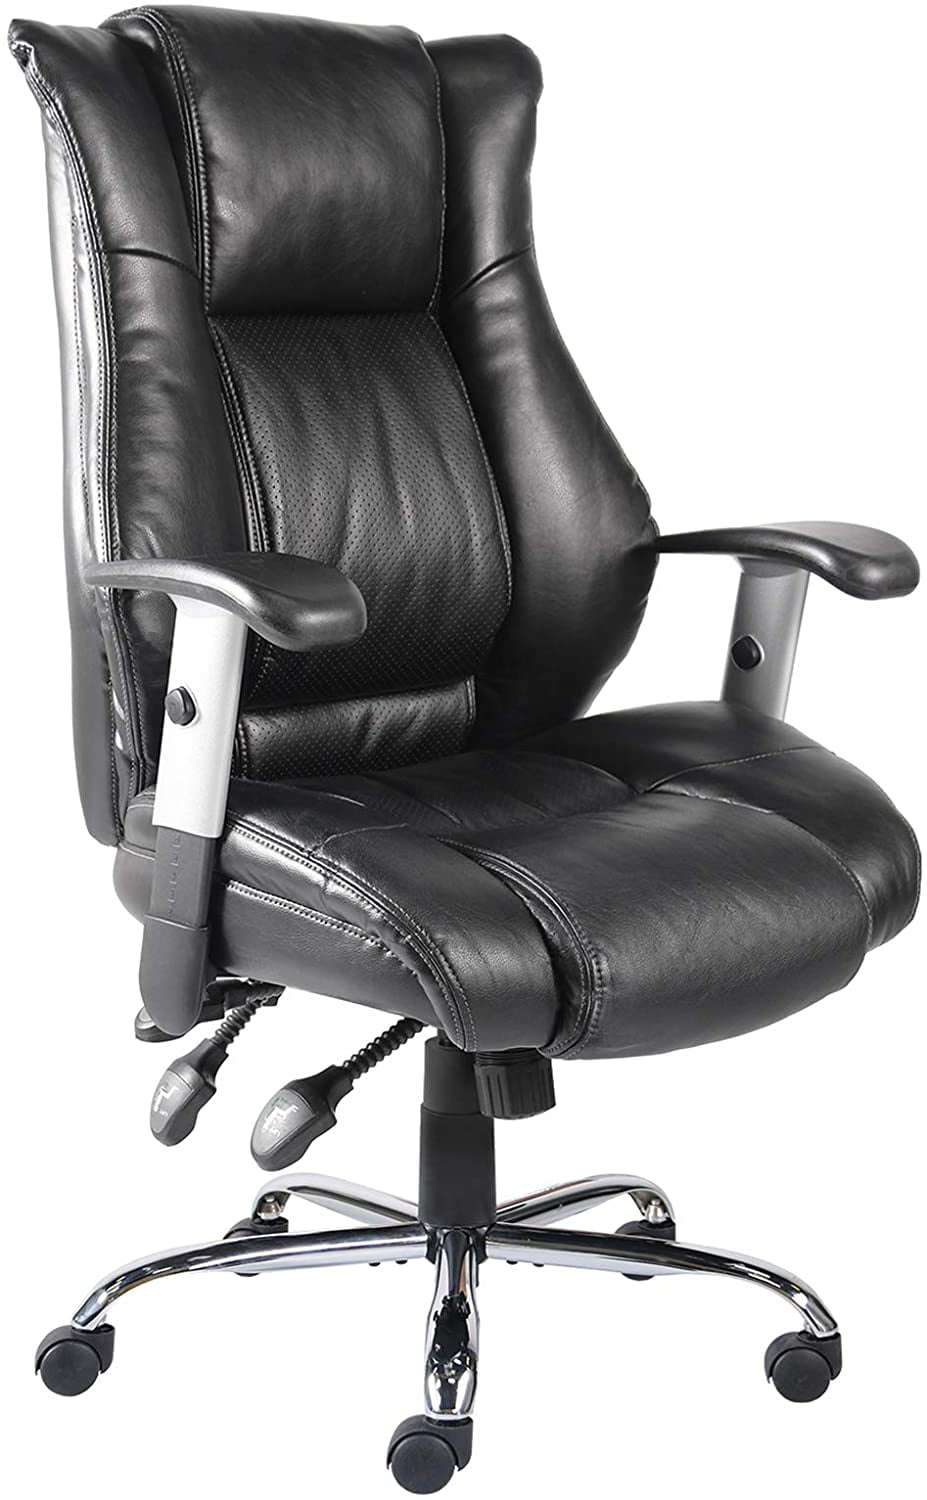 .Ergonomic Mid-back Computer Office Chair PU Leather Desk Task Task Swivel Black 